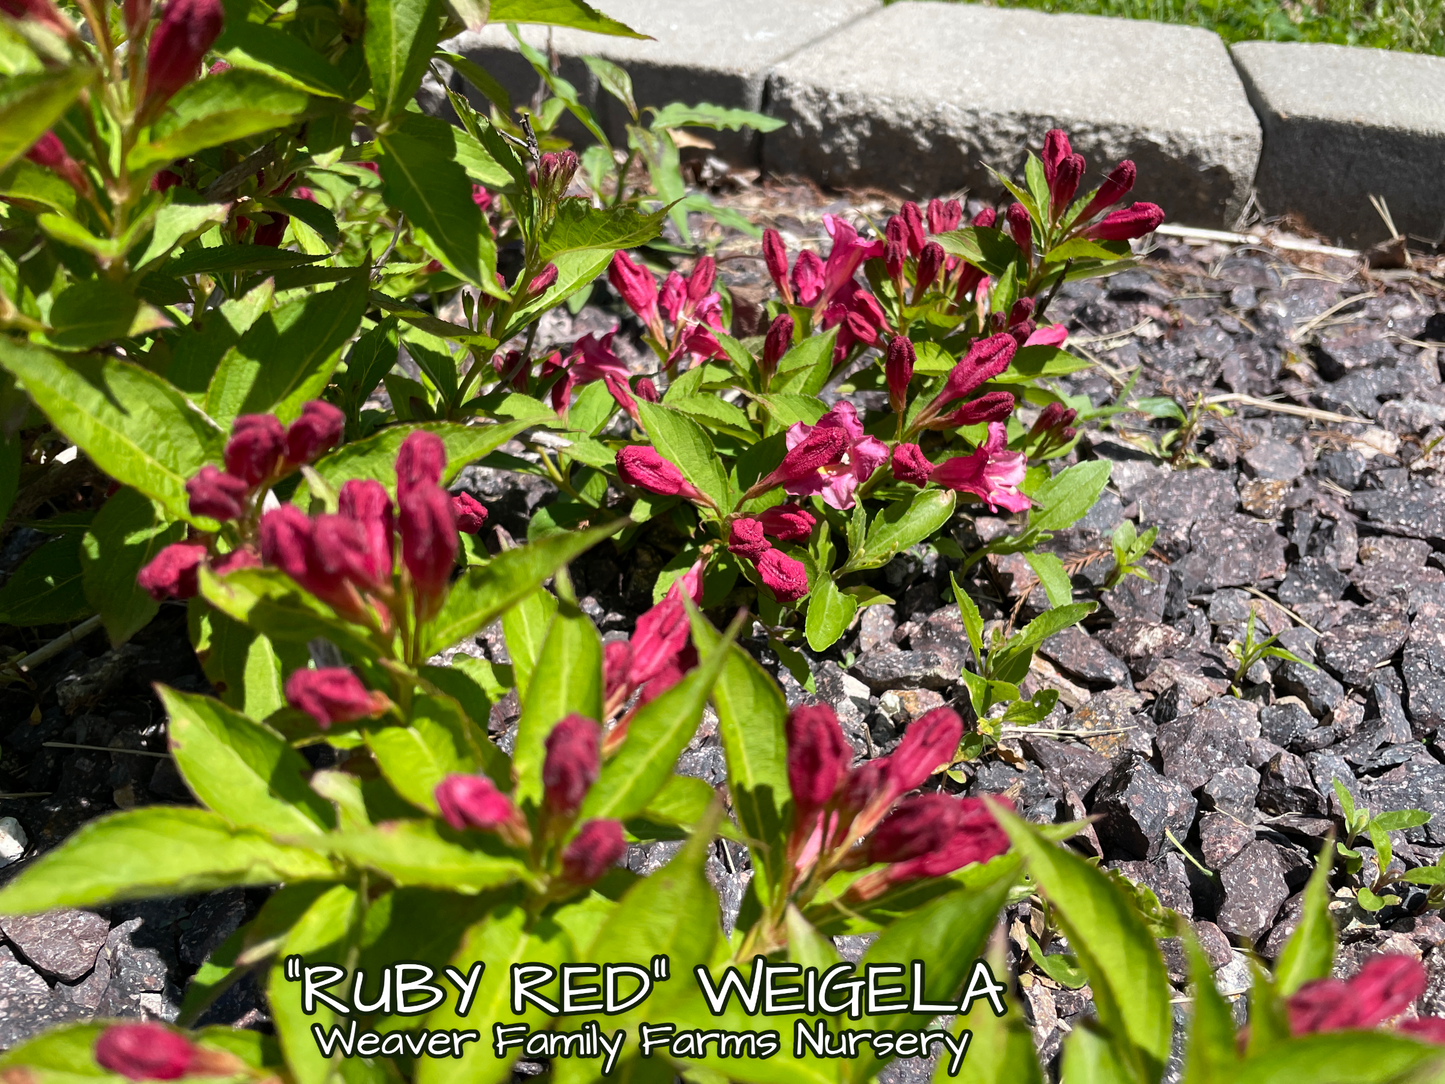 Weigela “Ruby Red” - Weaver Family Farms Nursery